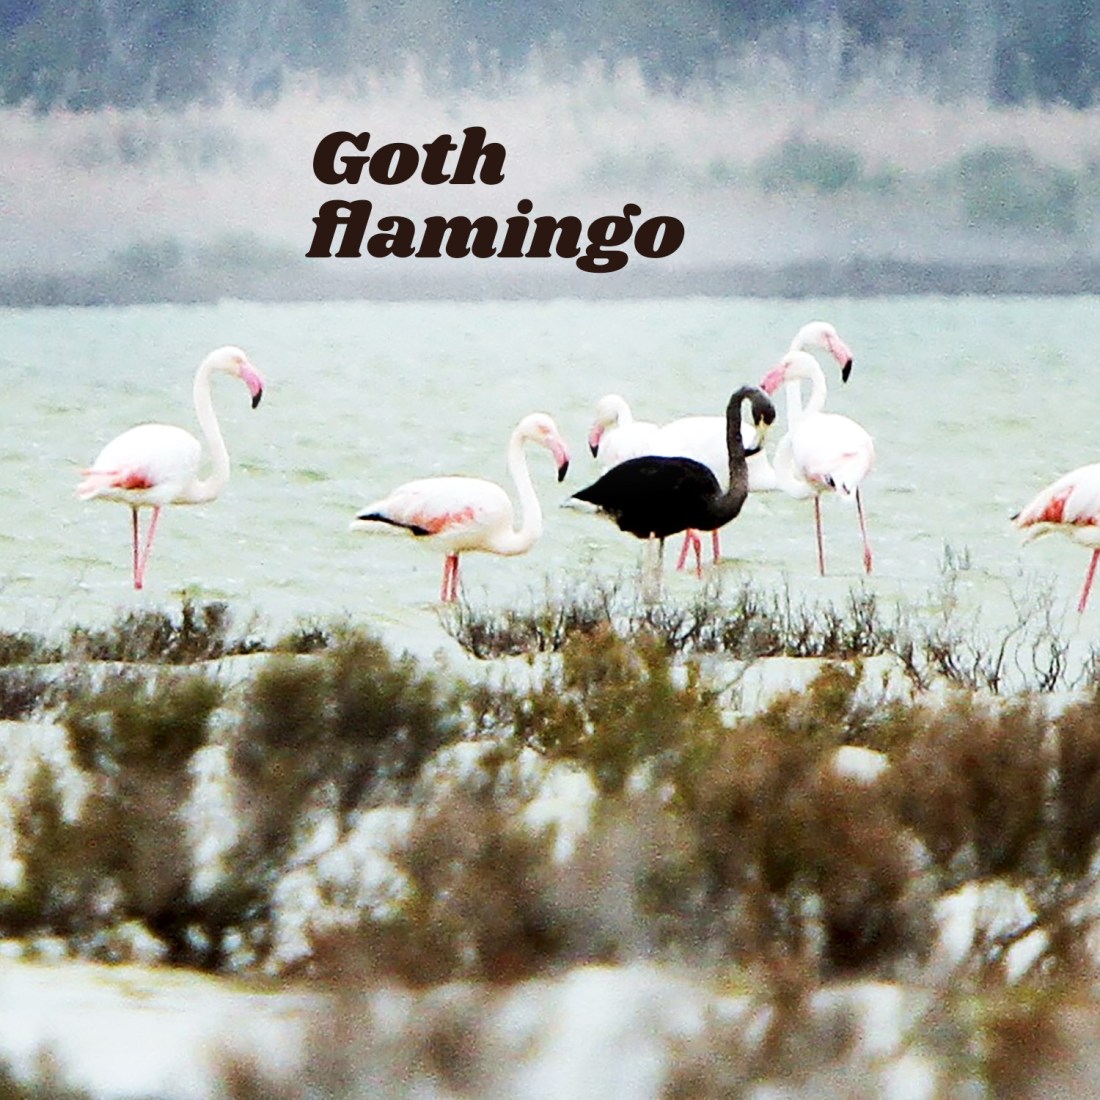 Goth flamingo